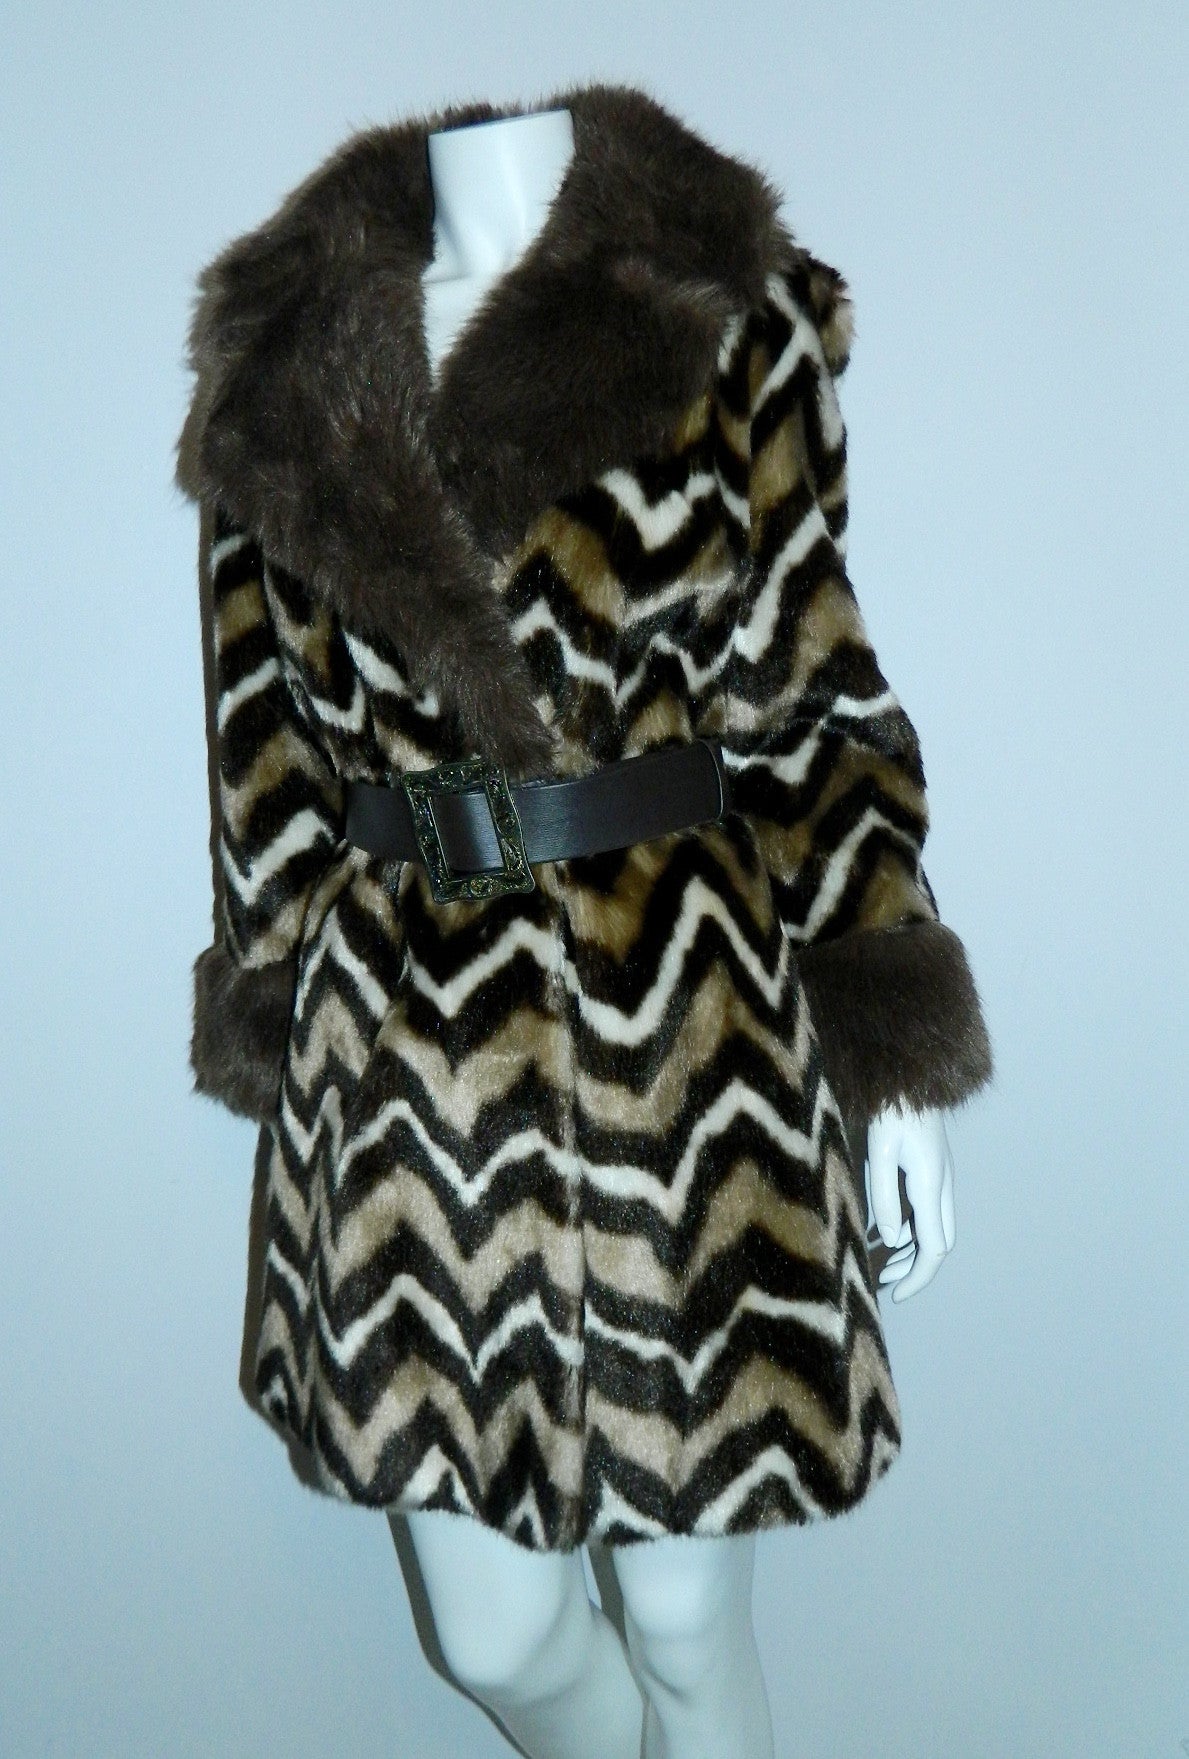 MOD 1960s faux fur coat brown Zig Zag ANIMAL print jacket XS - S